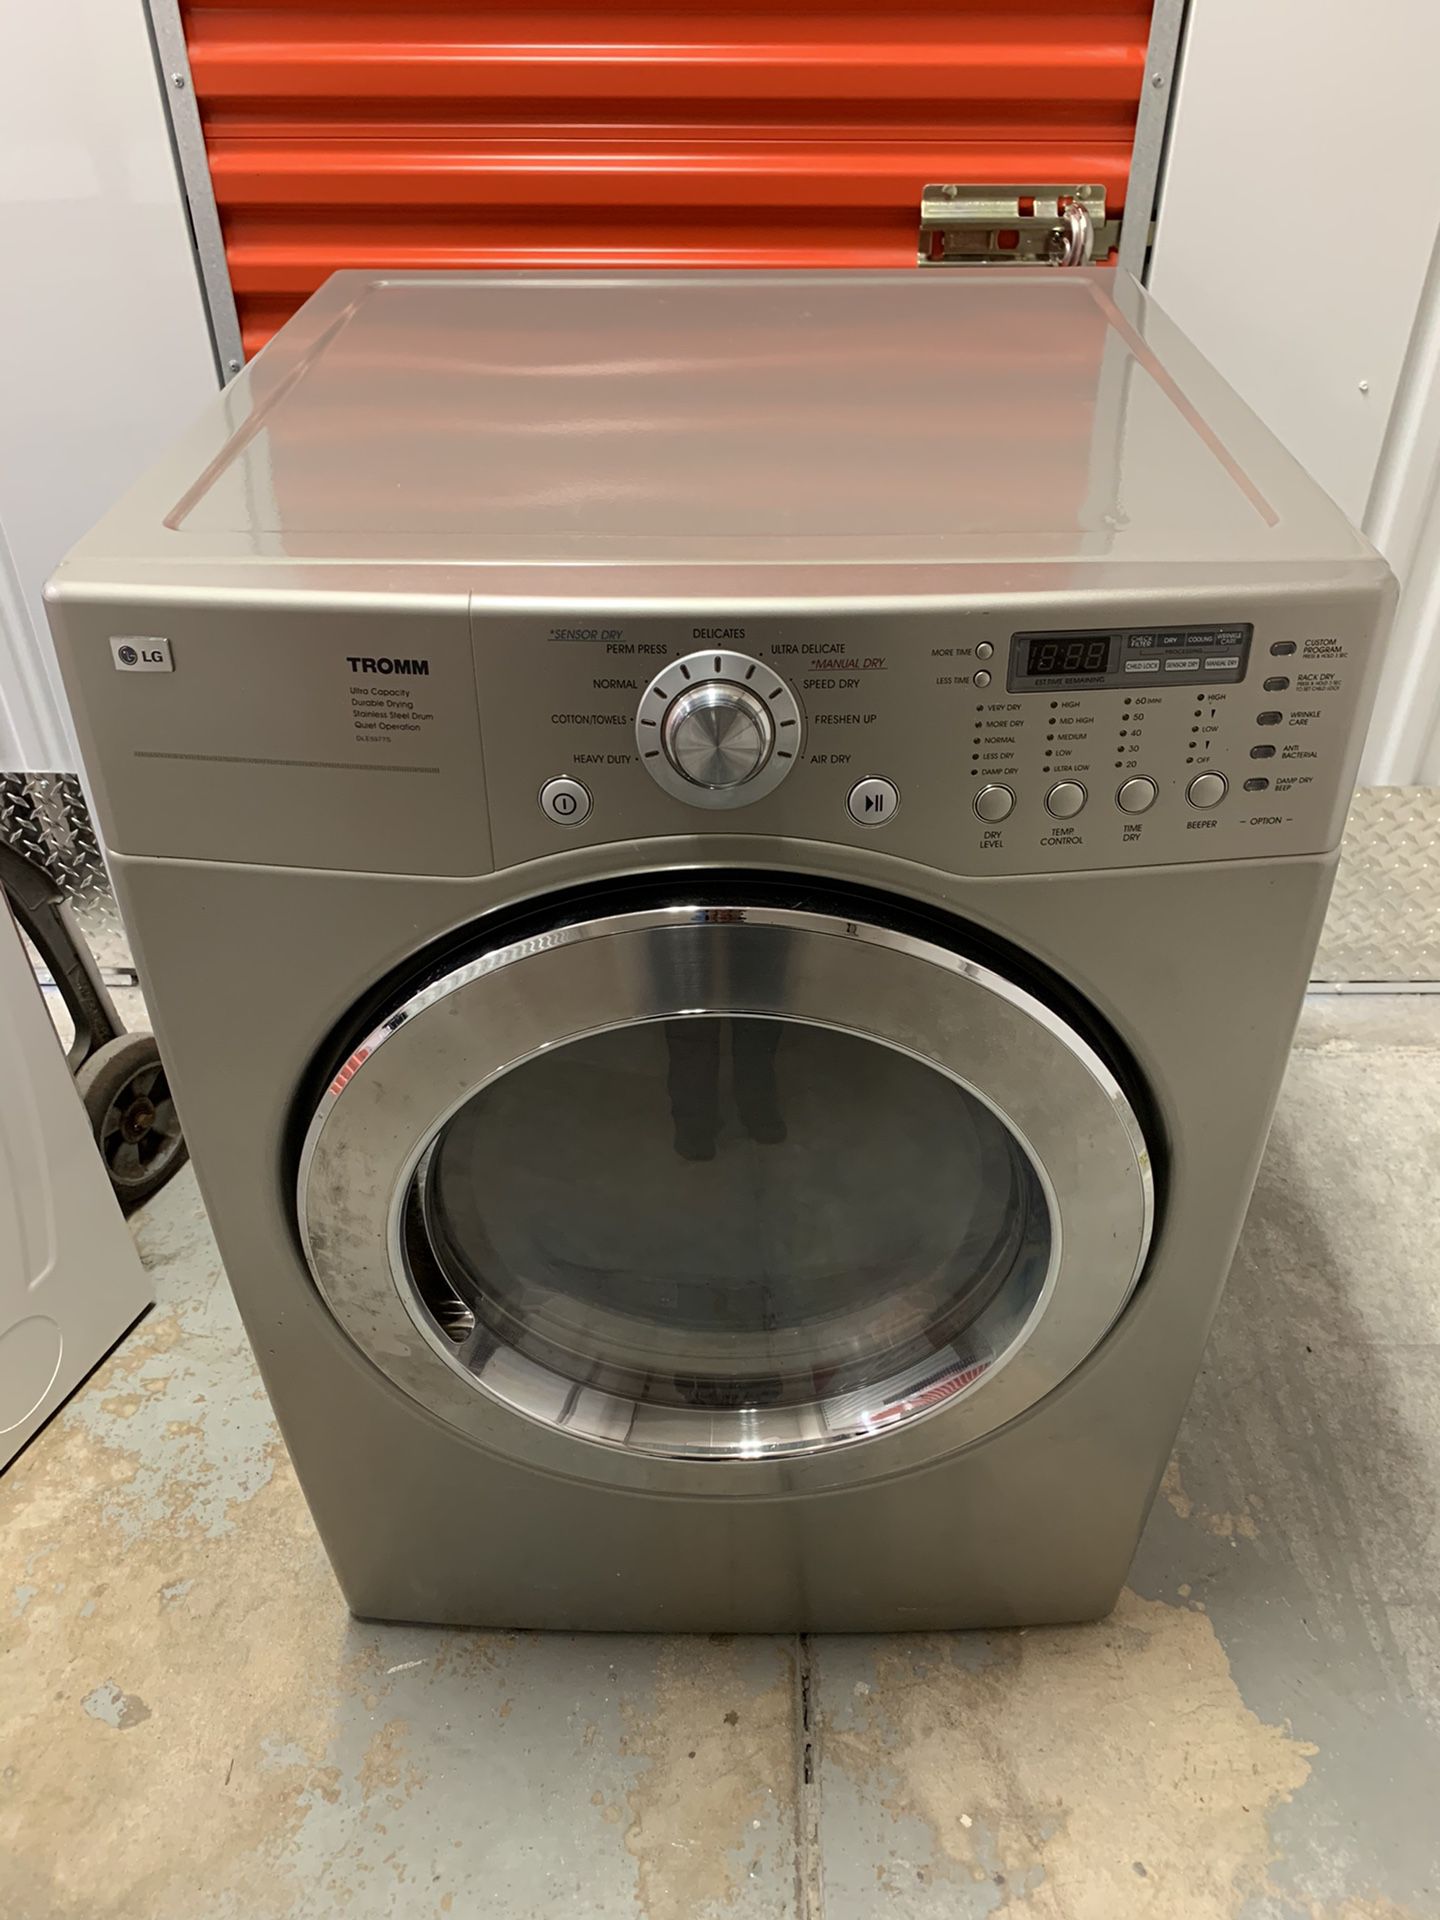 LG dryer in very good condition 30 days warranty